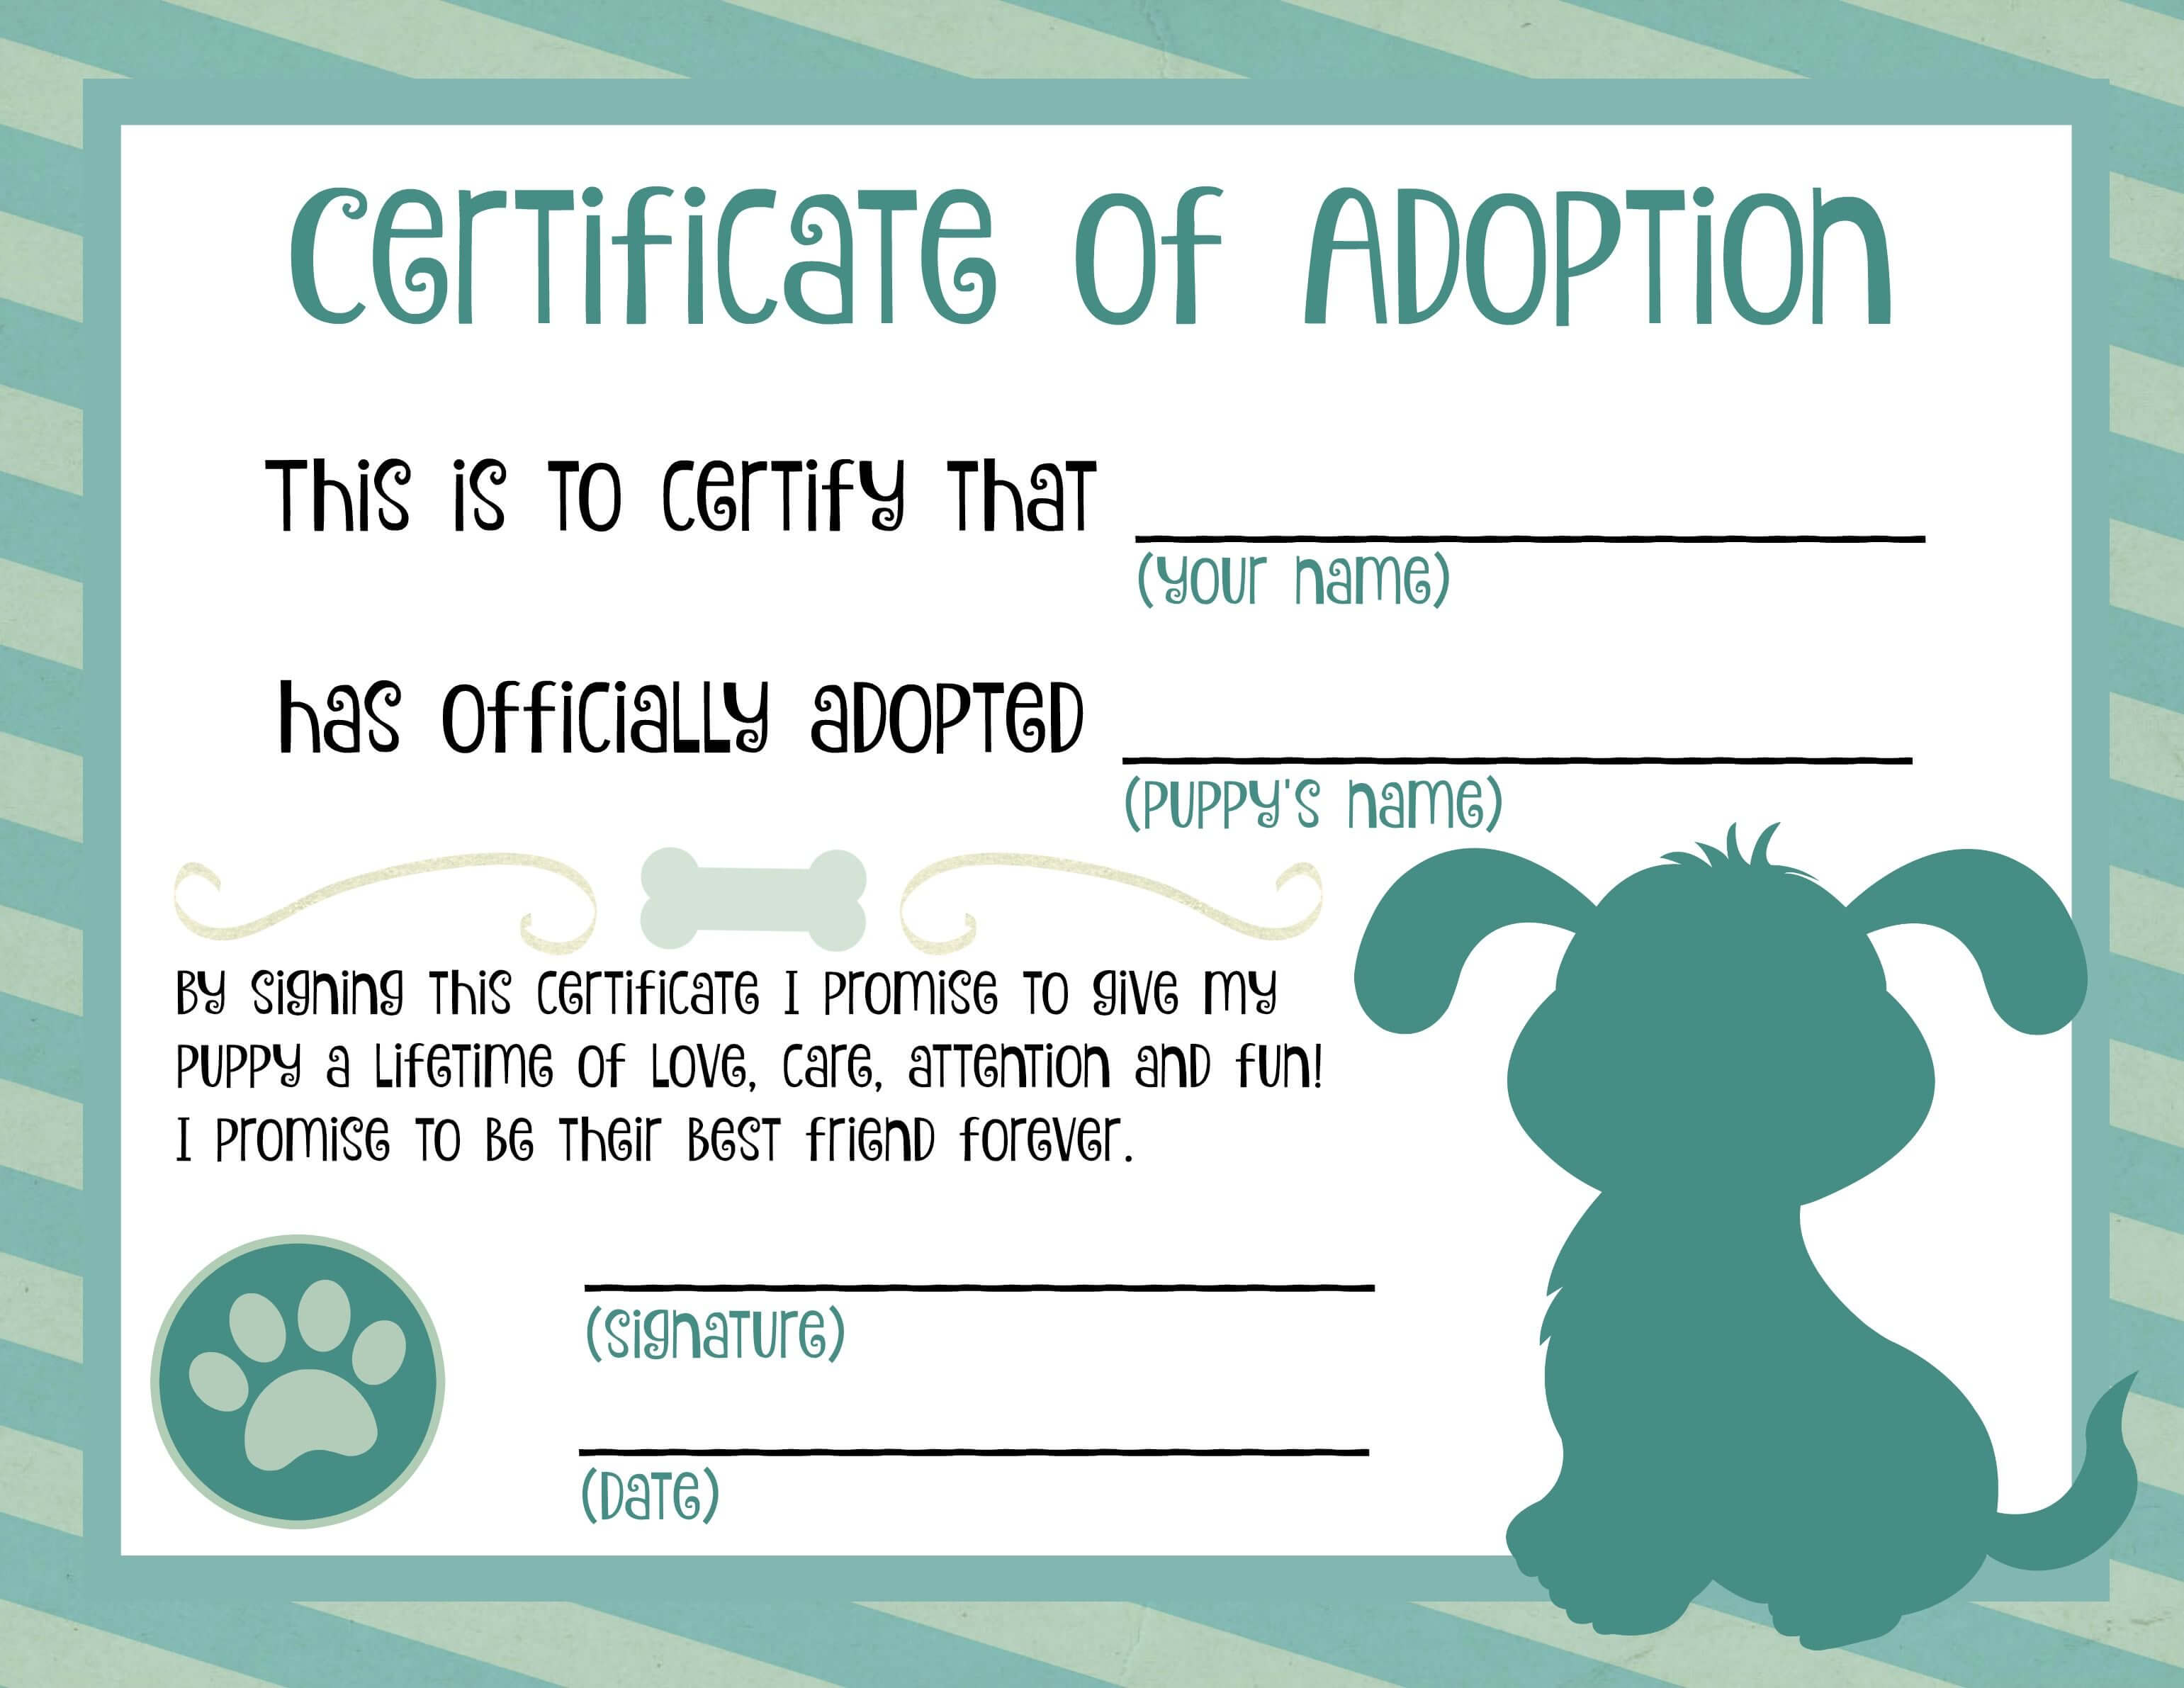 Puppy Adoption Certificate In 2019 | Adoption Certificate Regarding Pet Adoption Certificate Template